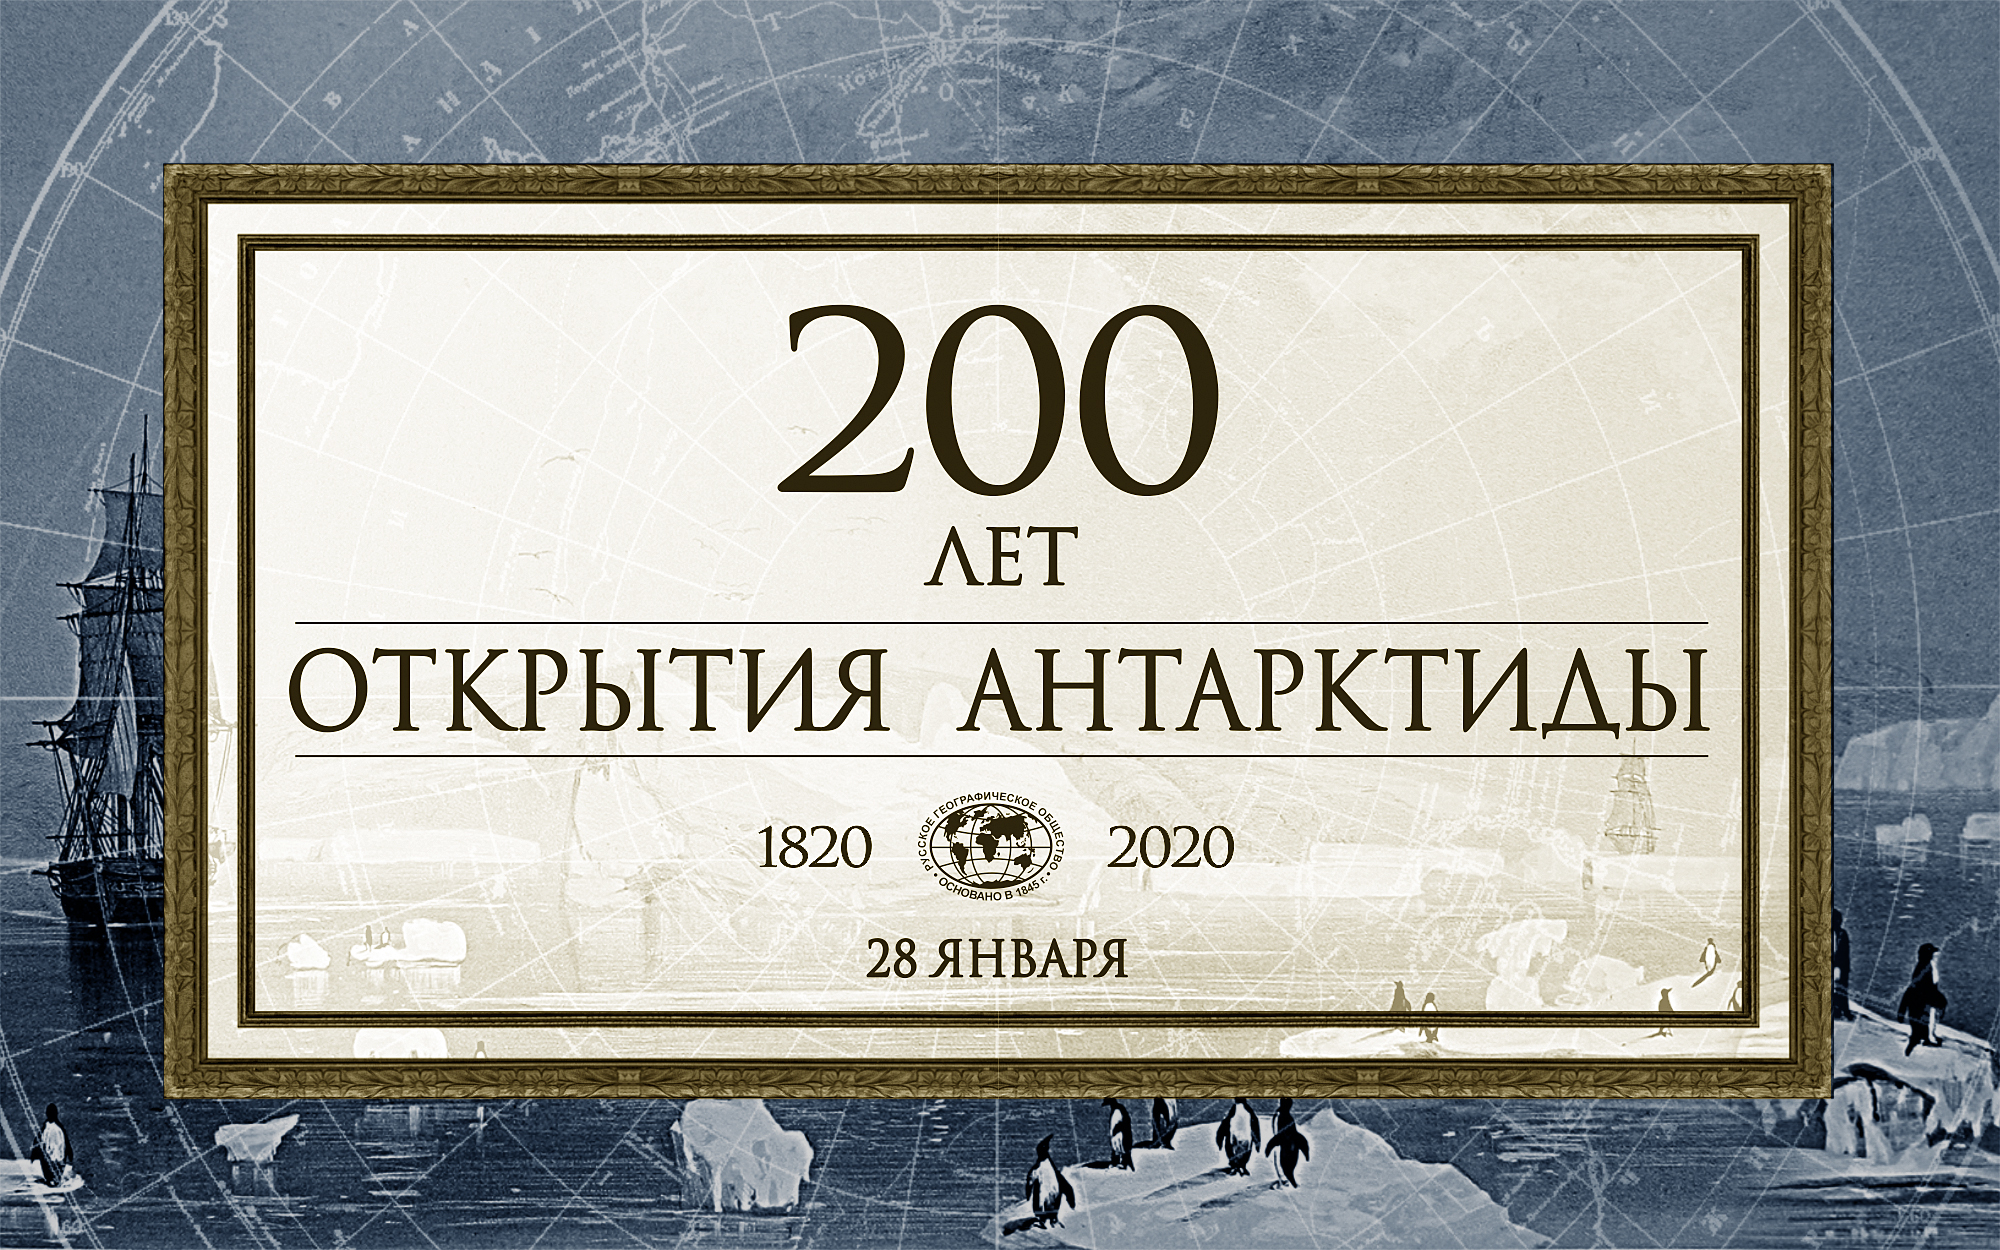 200 лет словами. 200 Лет Антарктиды. 200 Лет открытия Антарктиды. 200 Лет картинка. Логотип 200 лет открытия Антарктиды.